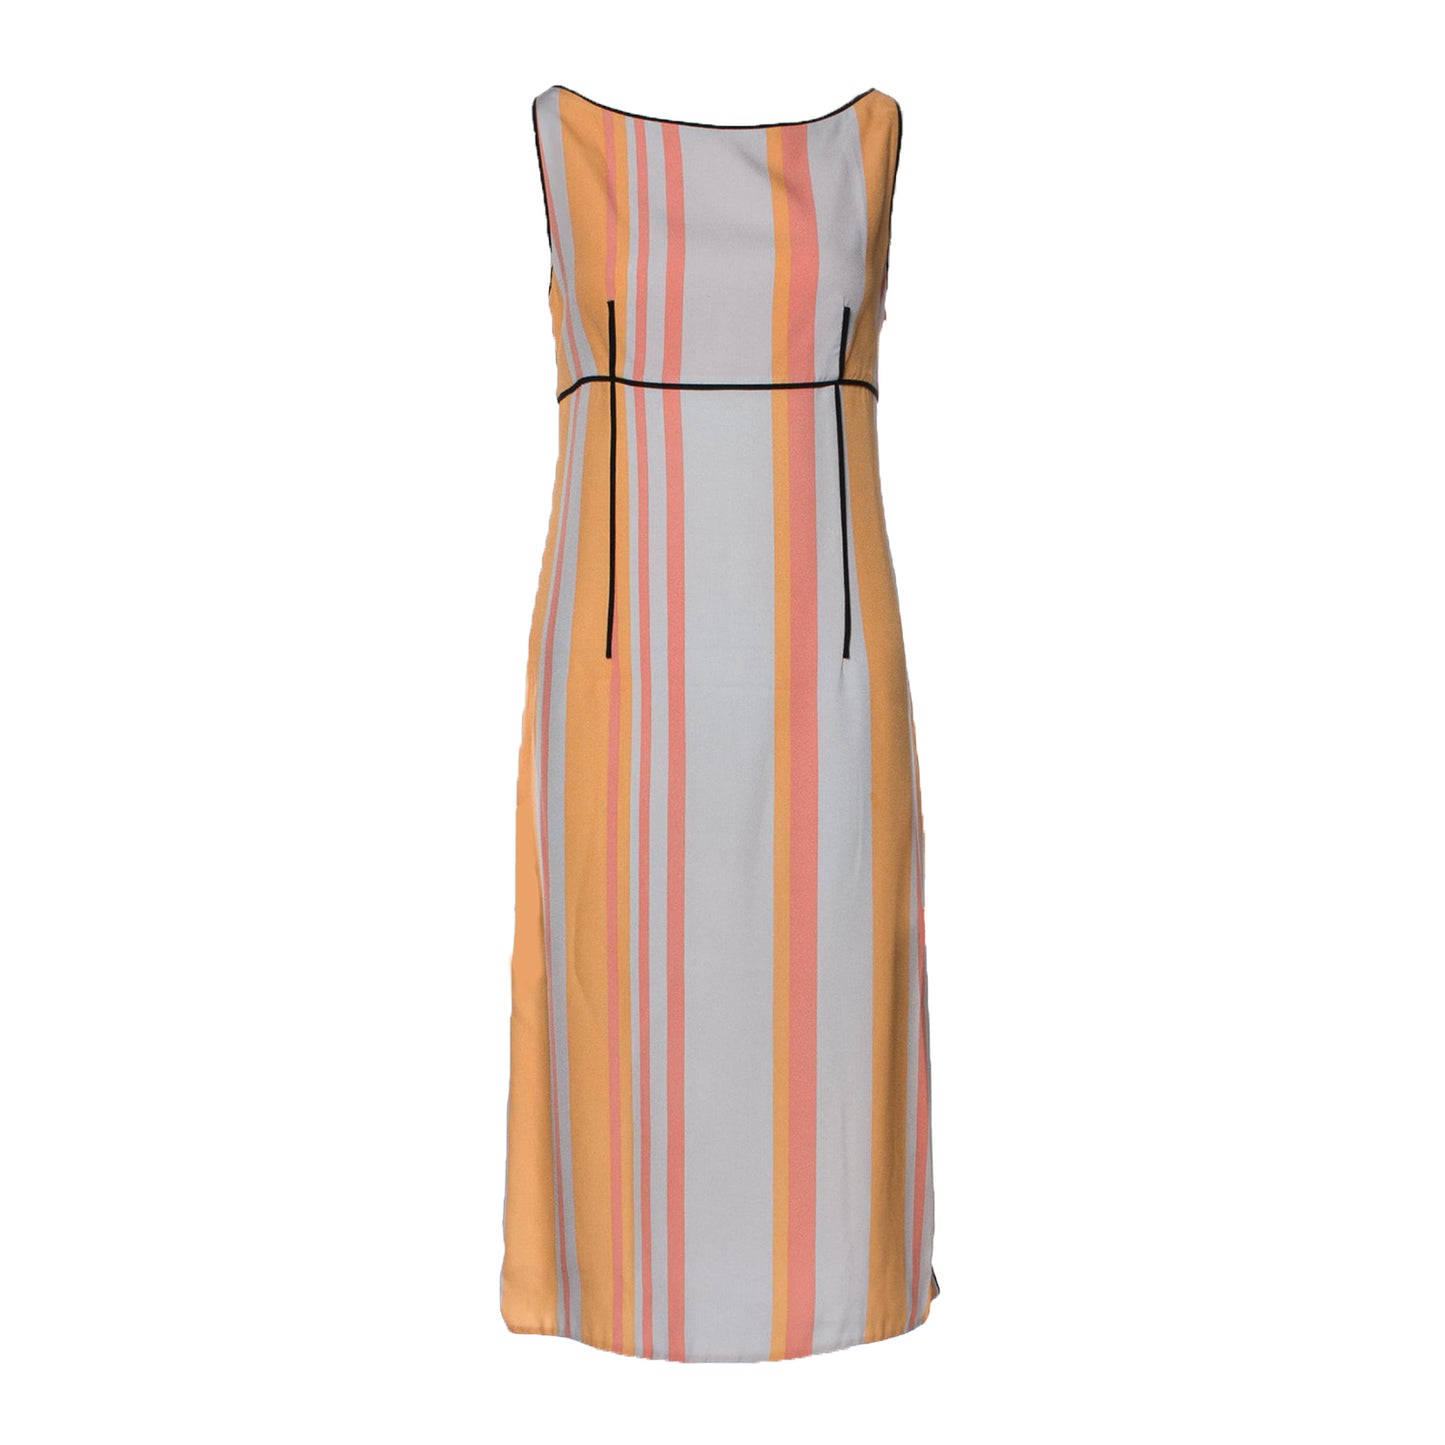 Prada Striped Sheath Dress